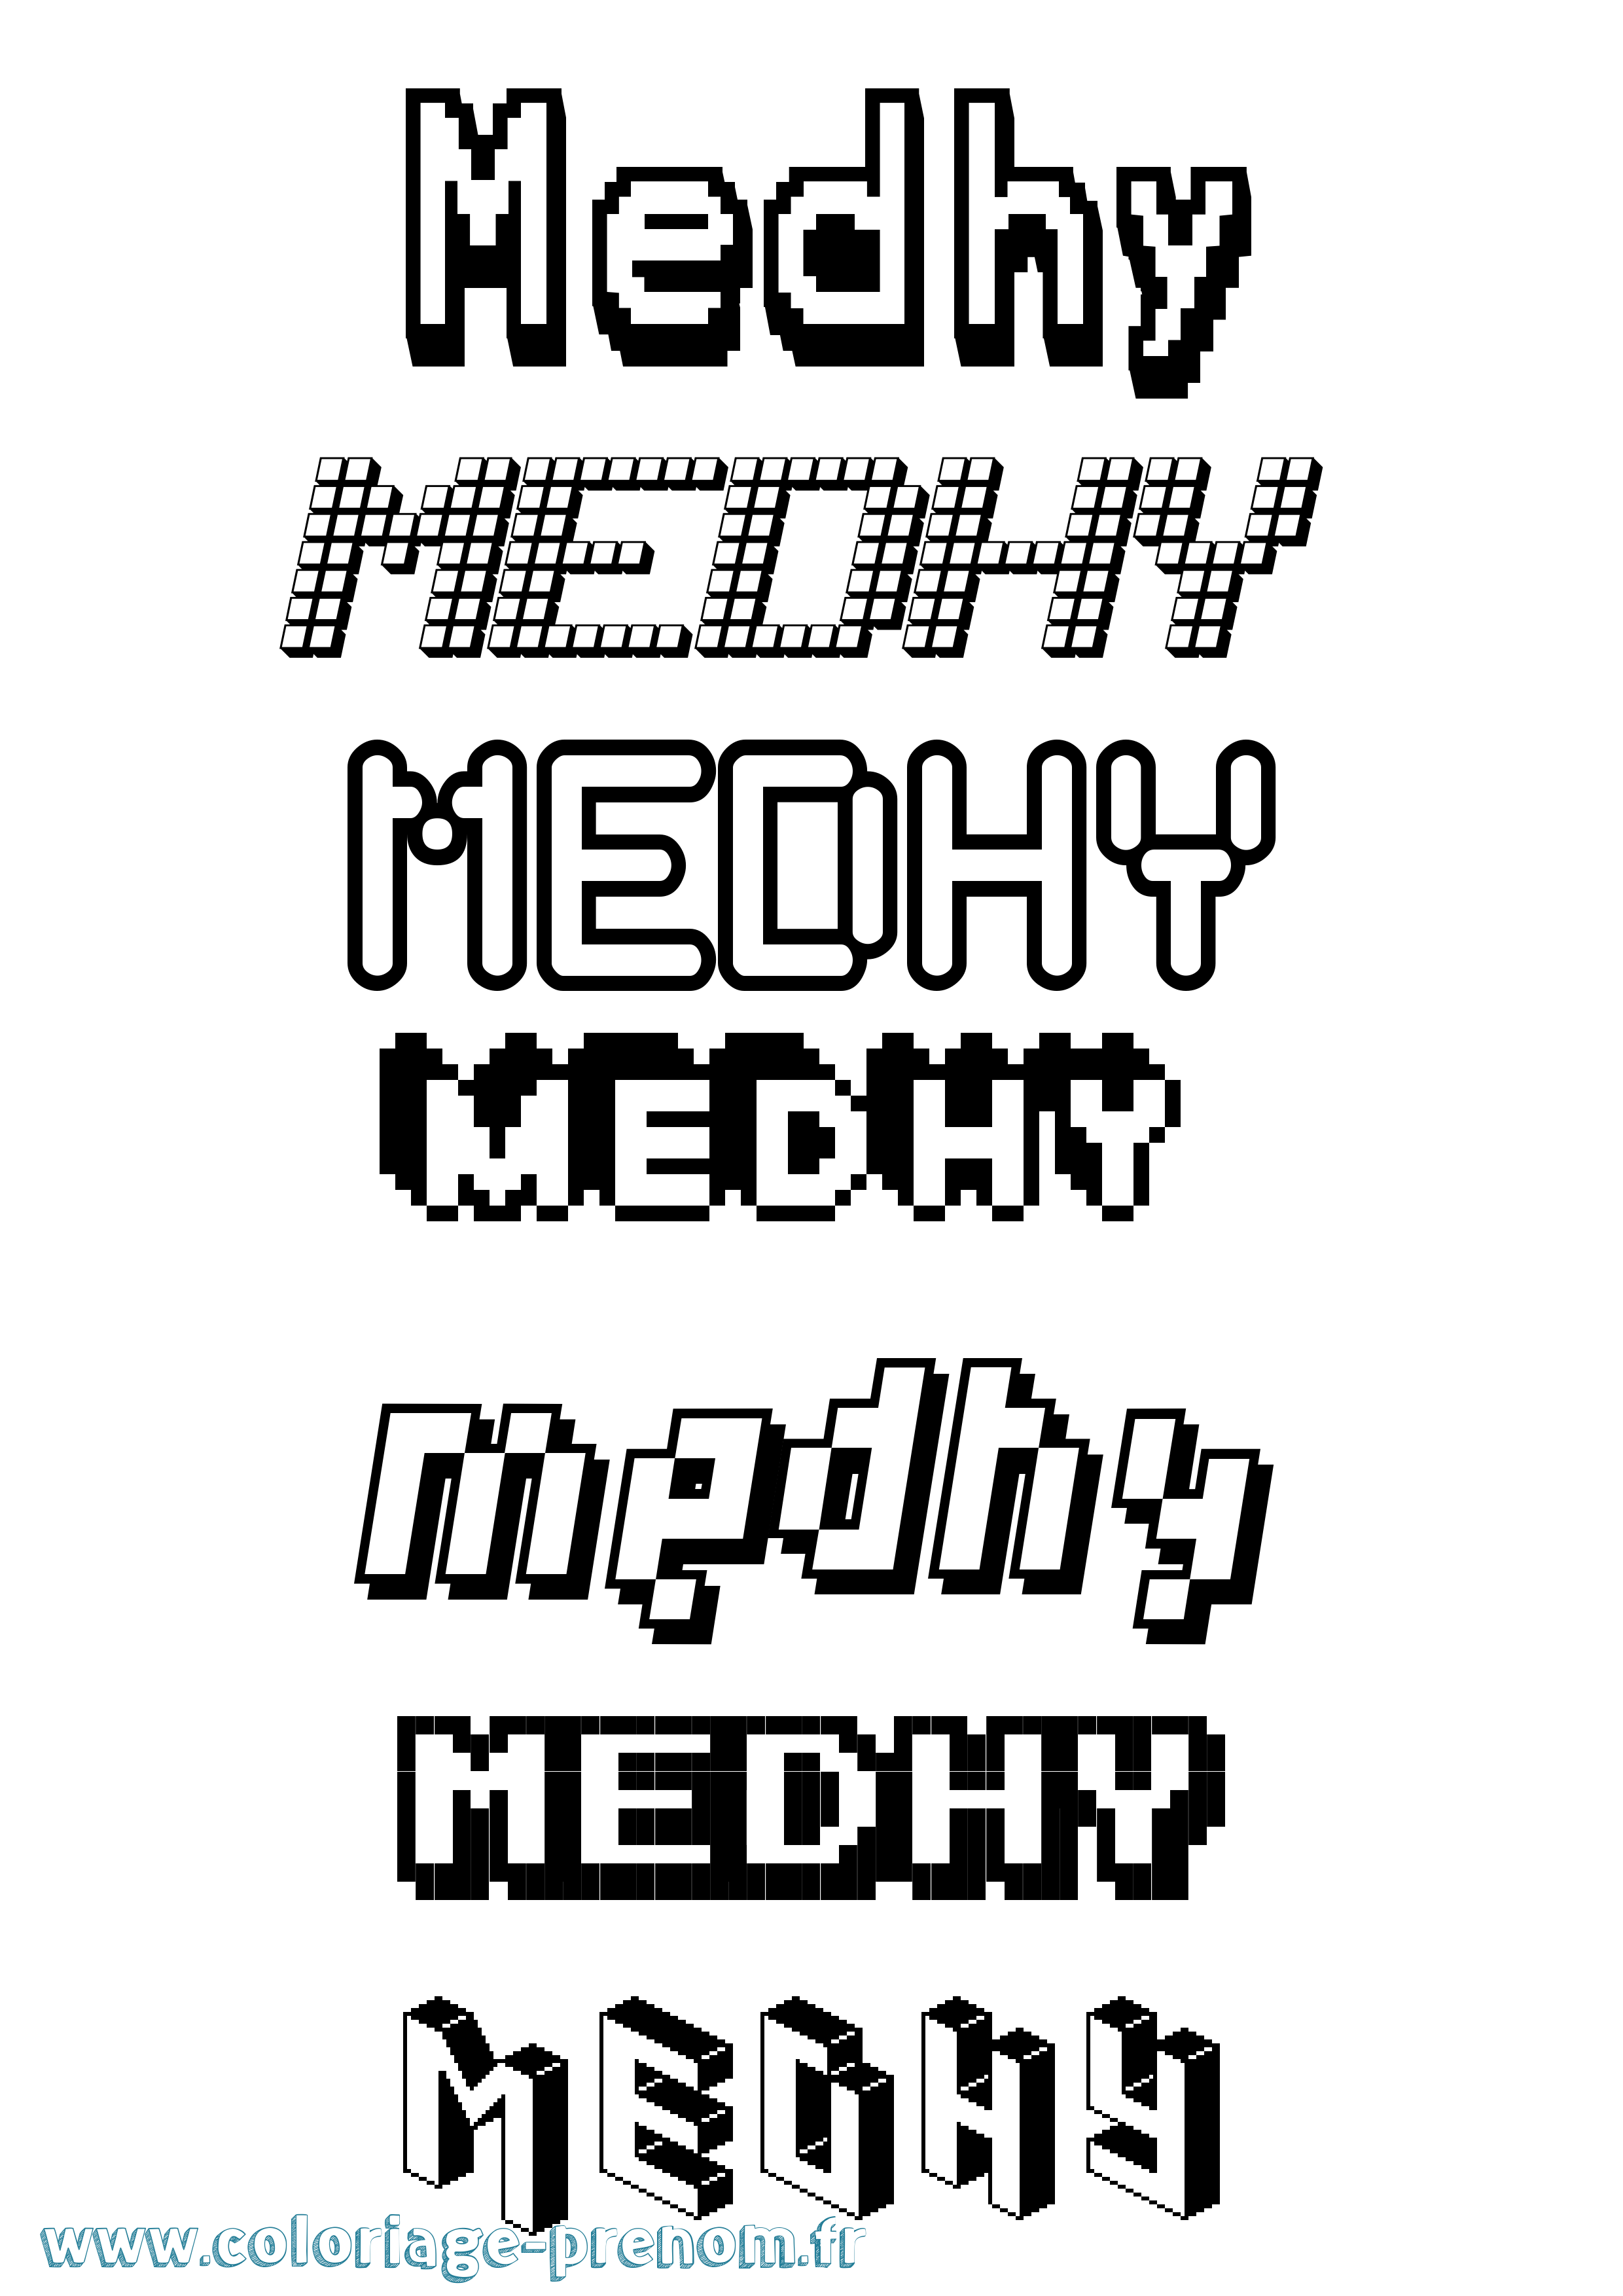 Coloriage prénom Medhy Pixel